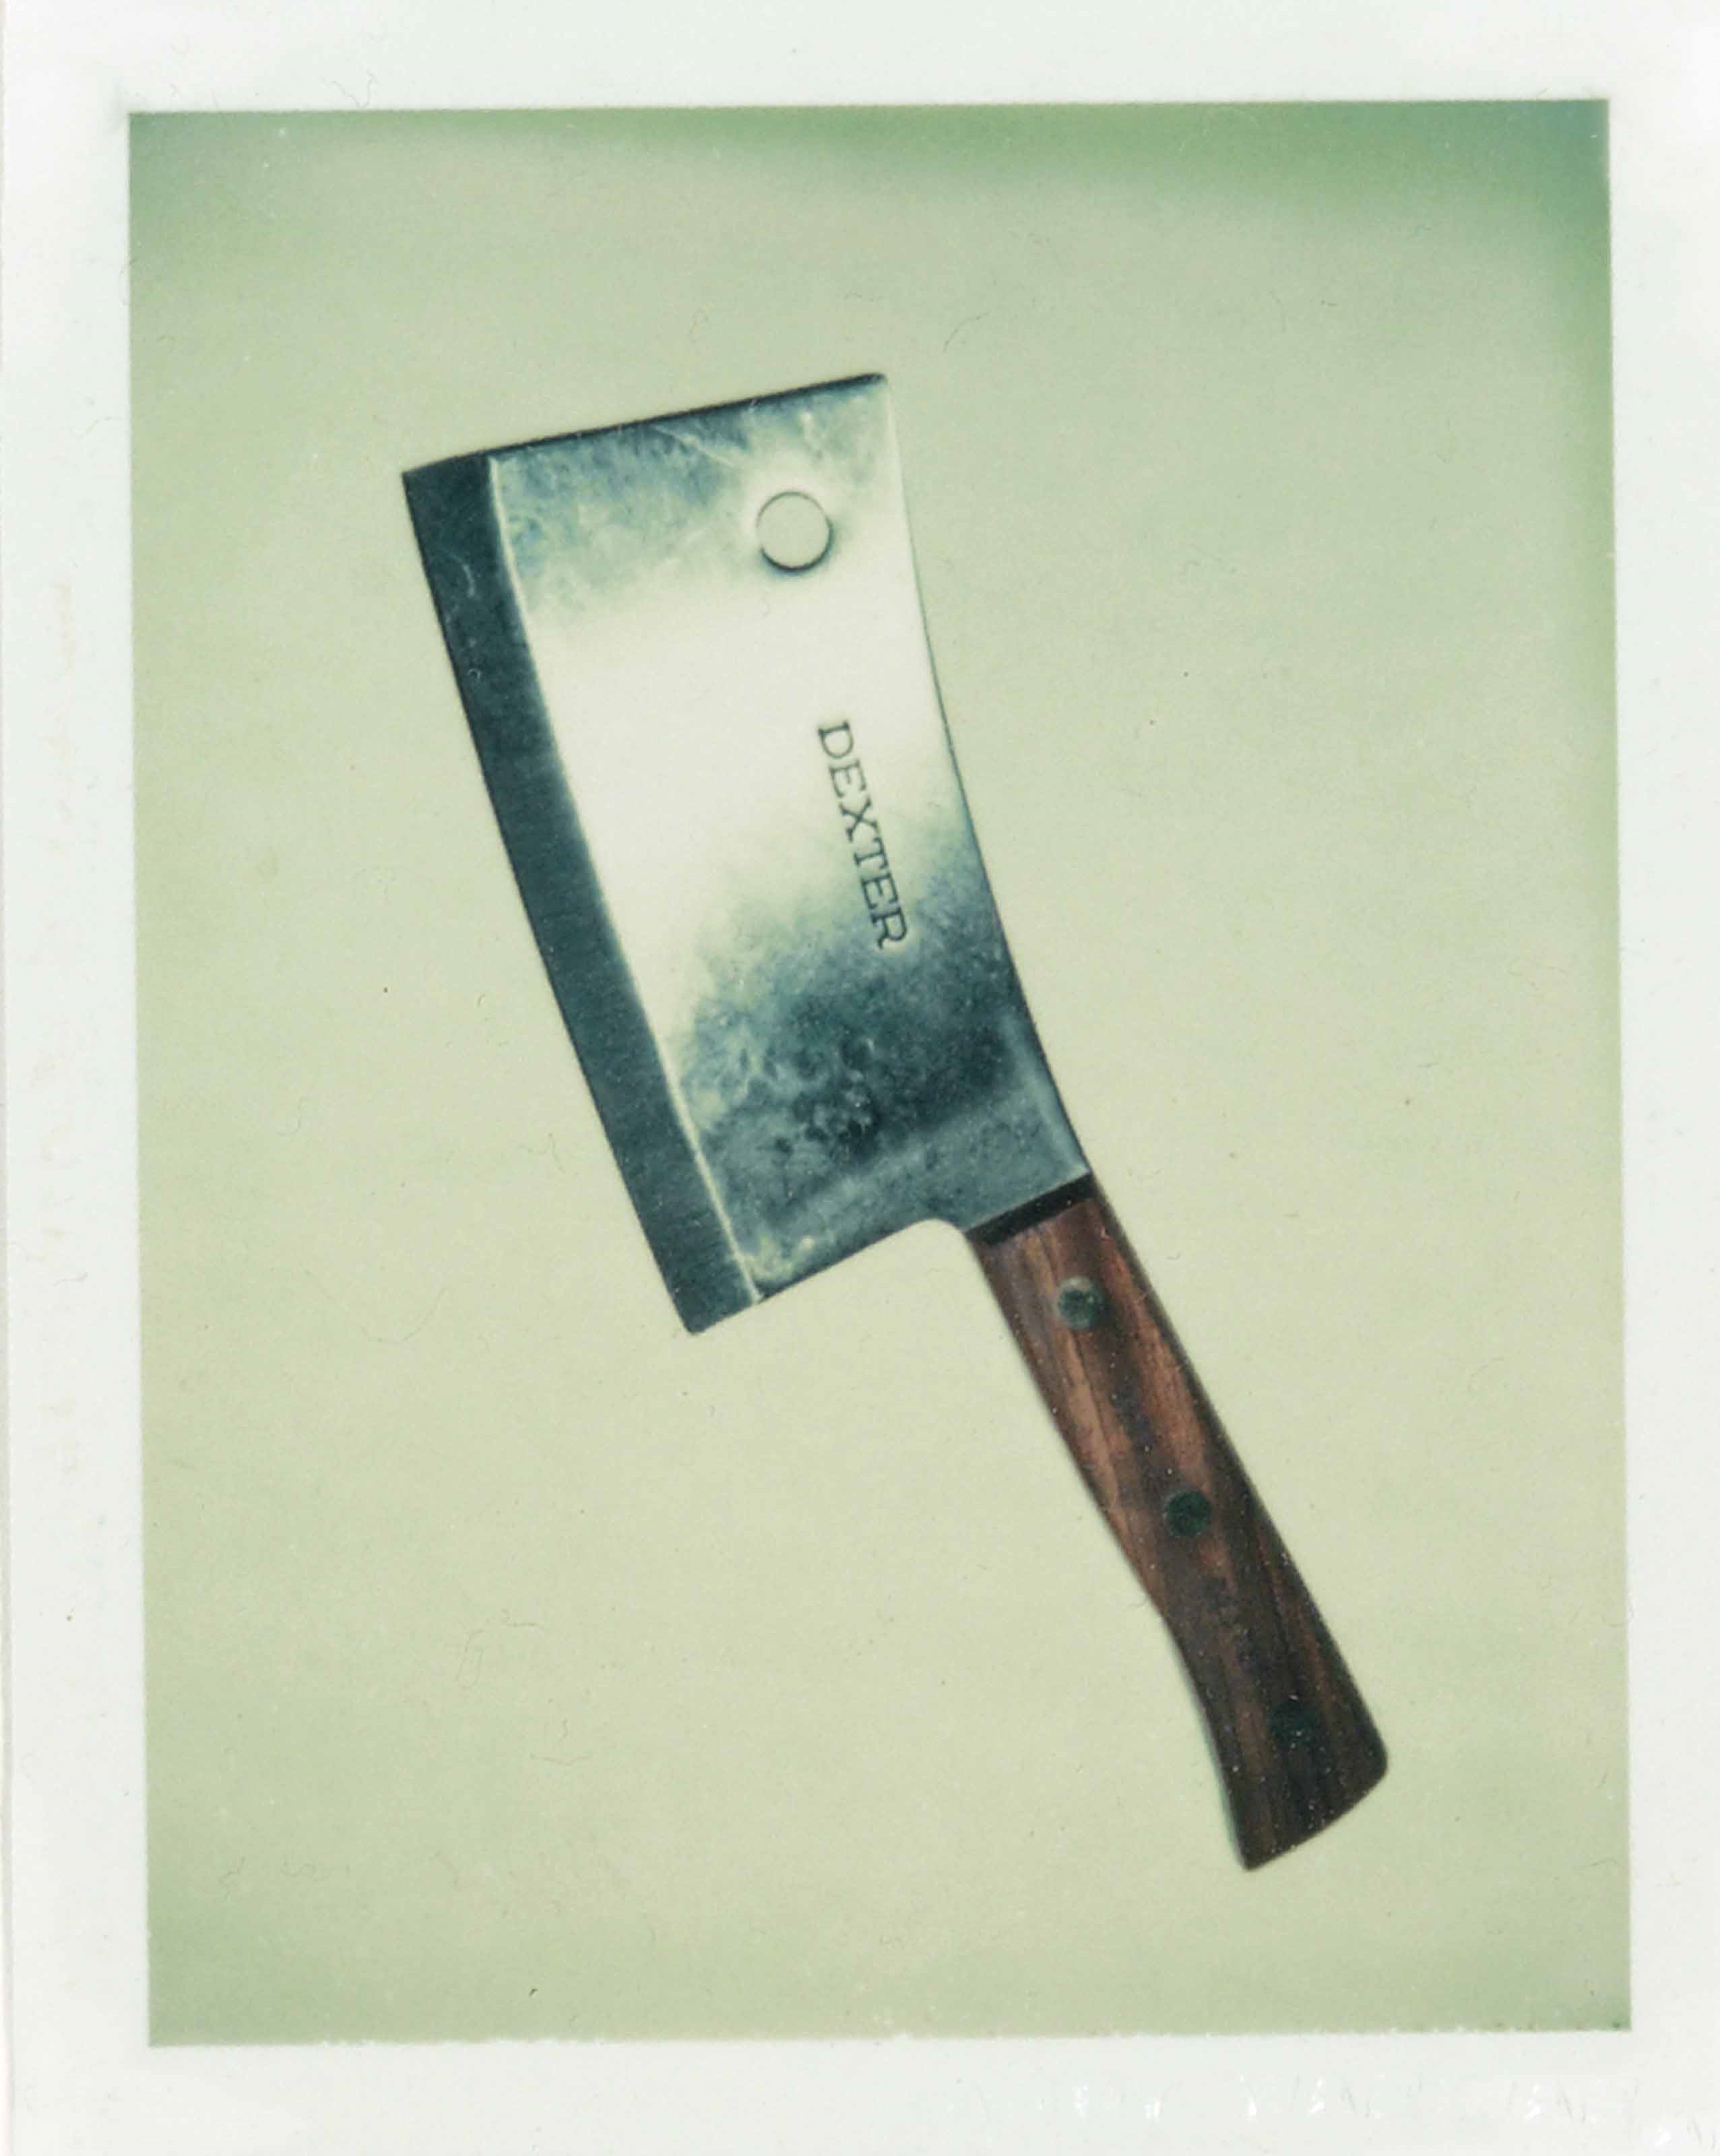 Sold at Auction: Lot of 2 : Vintage Dexter Knives